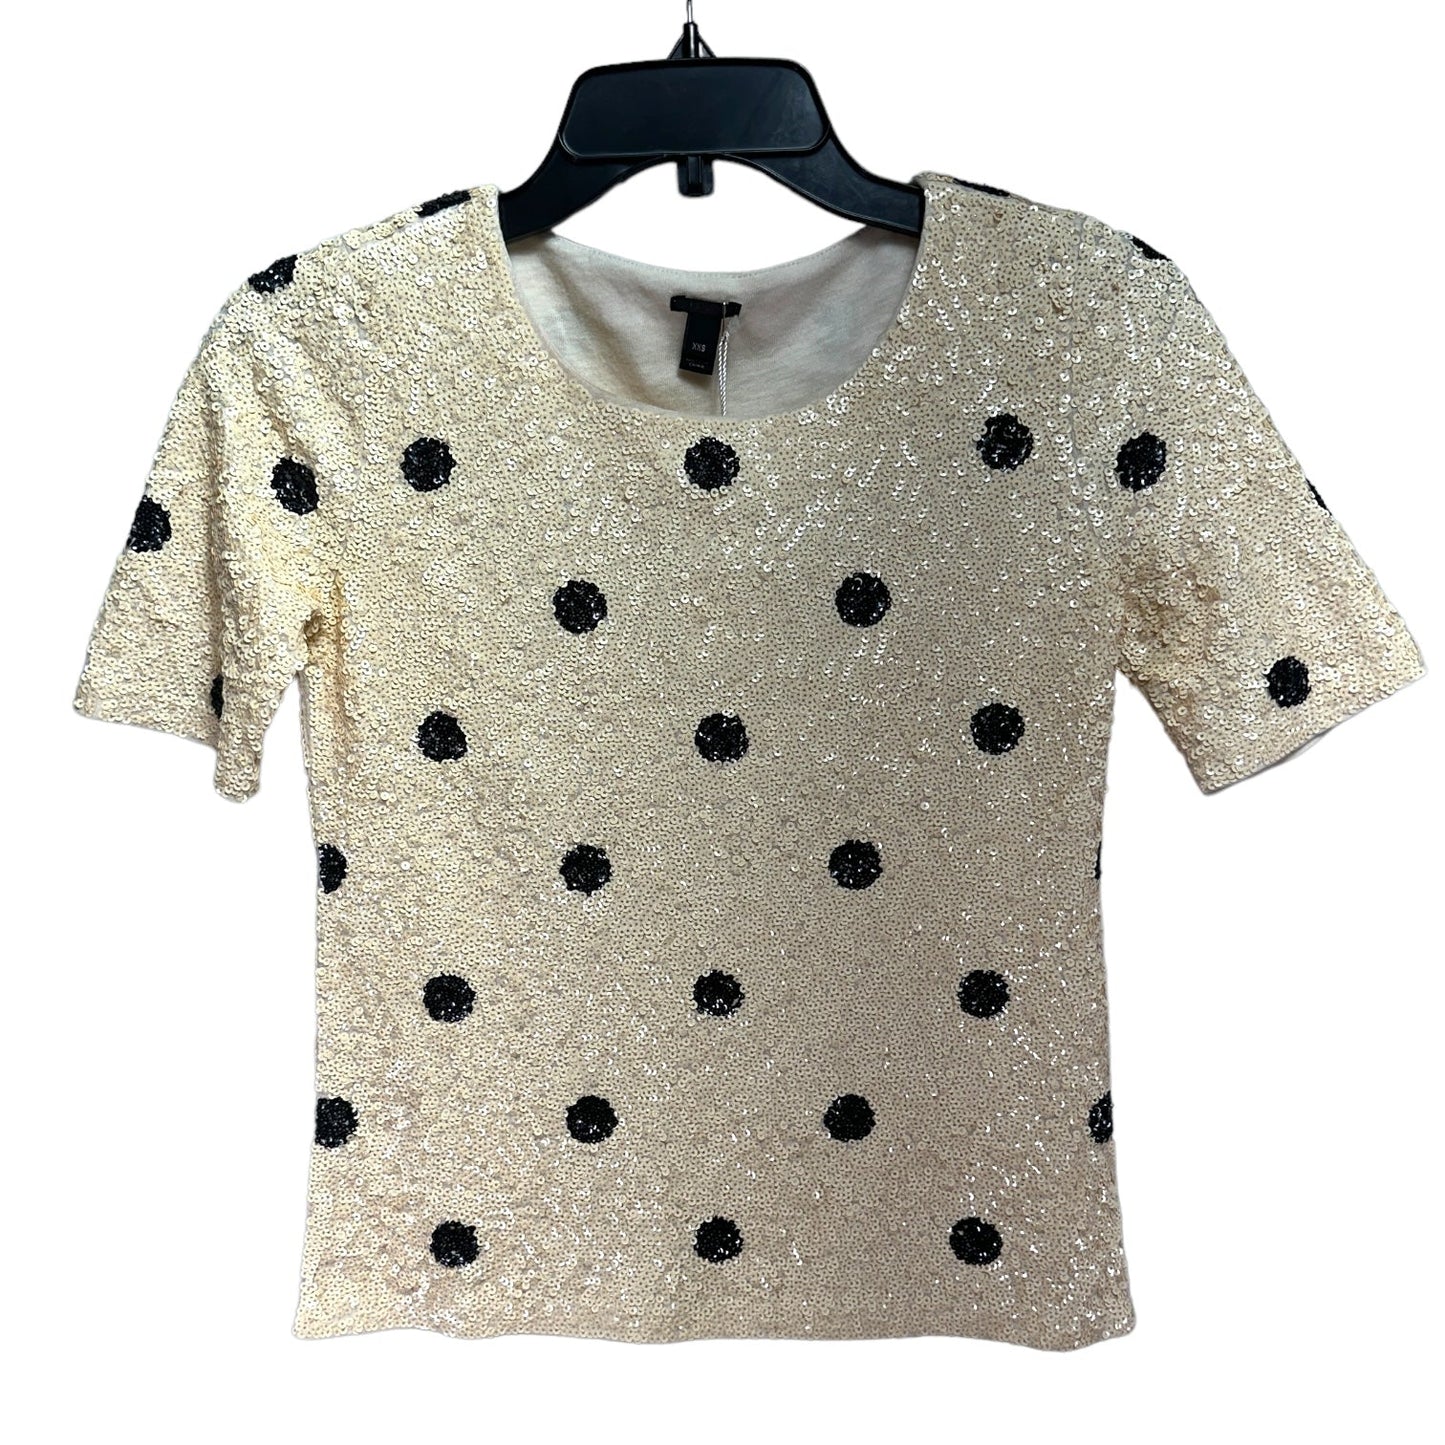 Polka Dot Sequin Top Short Sleeve By J. Crew  Size: Xxs